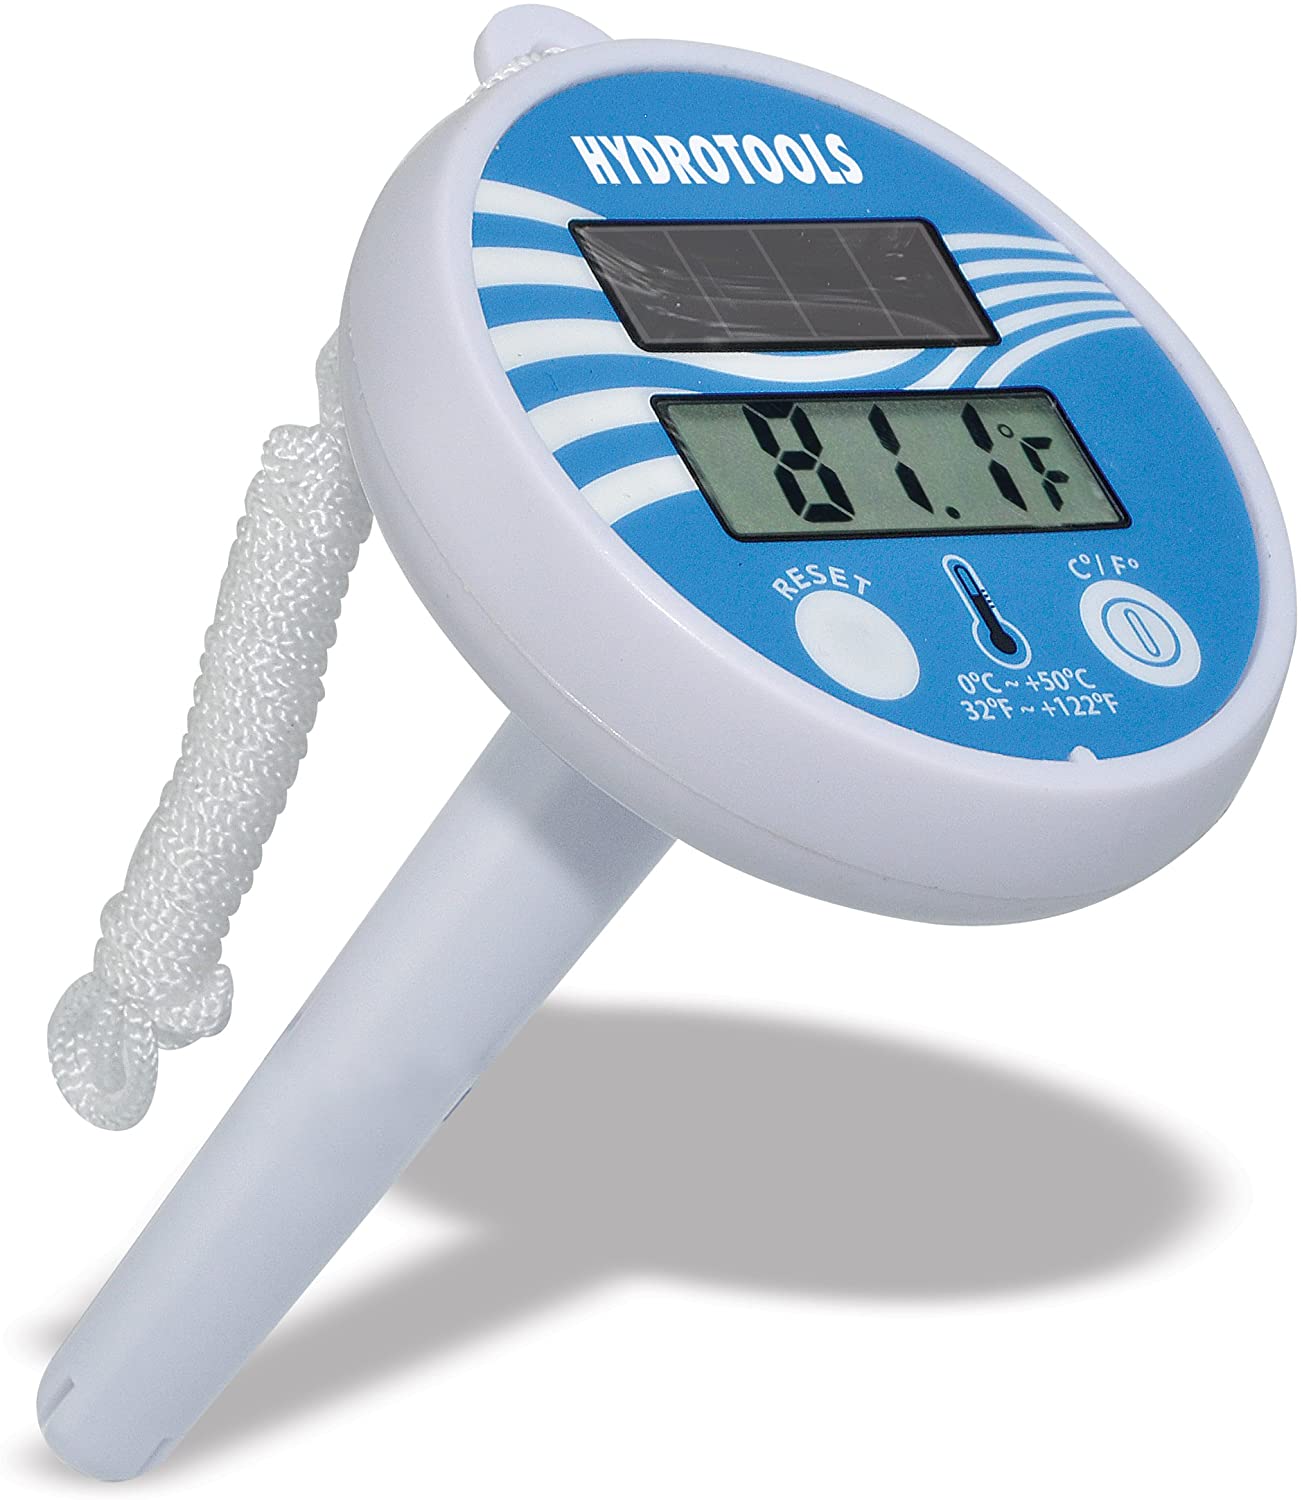  Hydrotools Solar Thermometer